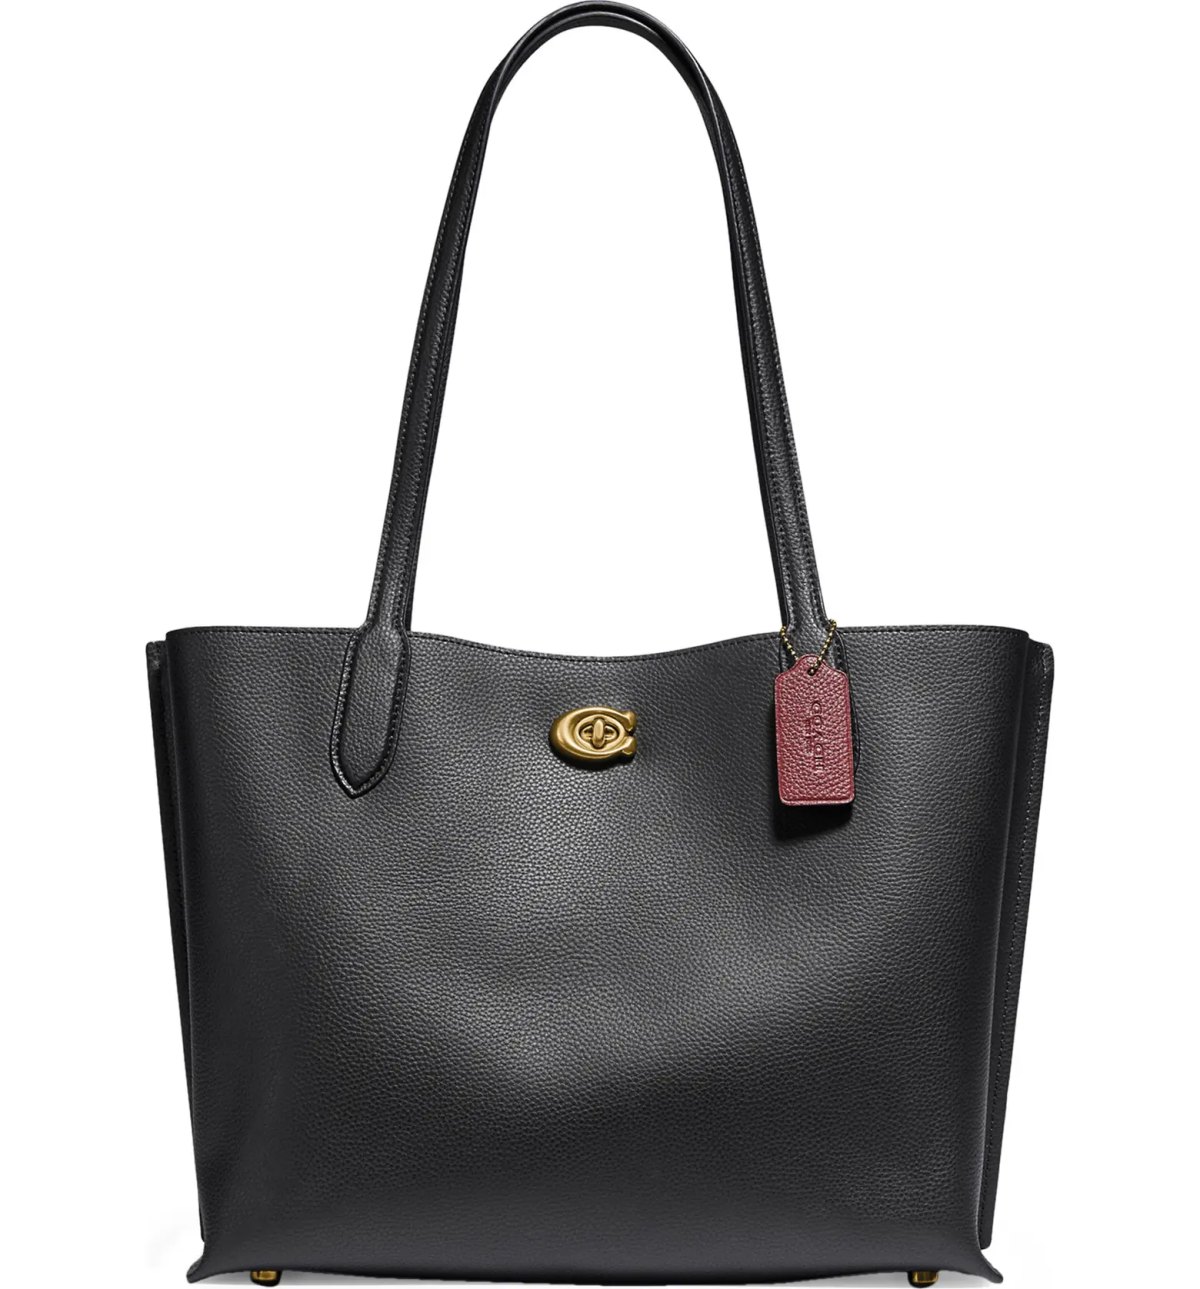 Top 10 Luxury Work Bags - luxfy